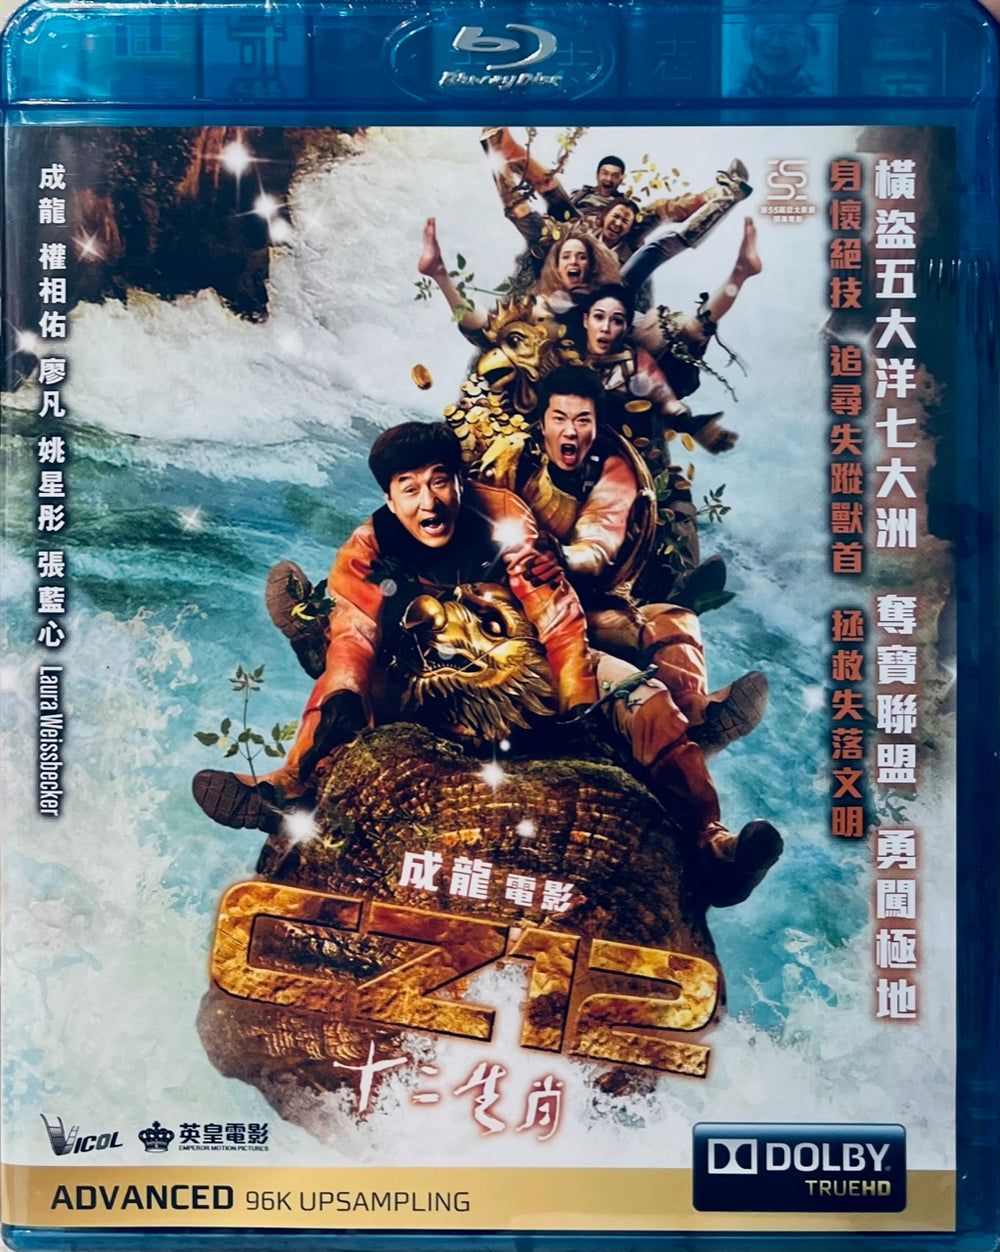 Chinese Zodiac CZ12 2012 (Hong Kong Movie) Blu-ray ENGLISH SUBTITLES (REGION 3)